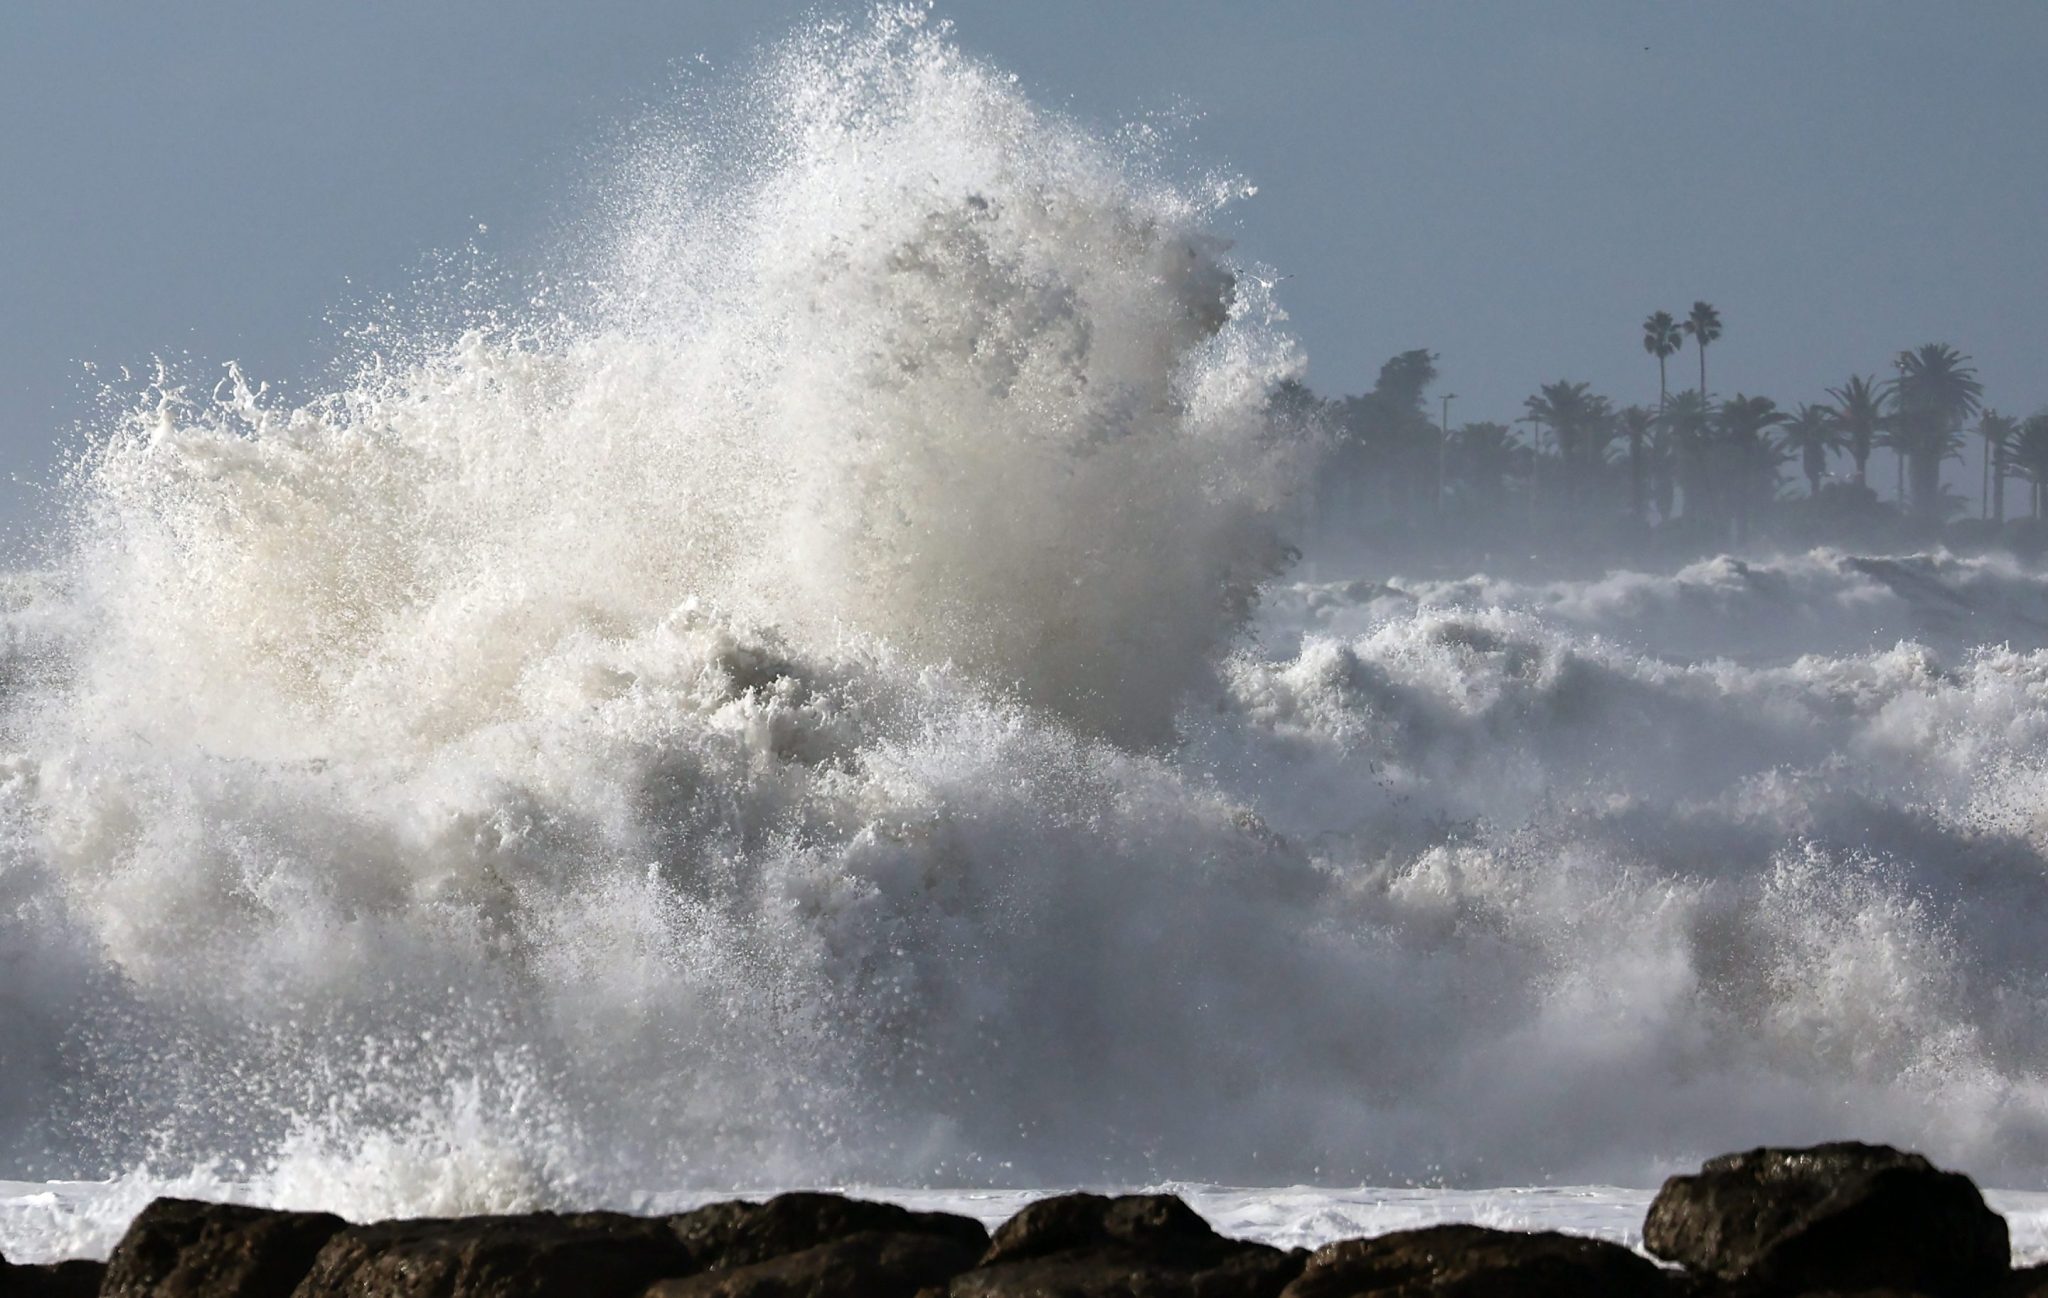 ‘Take caution’: Giant waves pummeling California flood beach neighborhoods and send spectators to the hospital